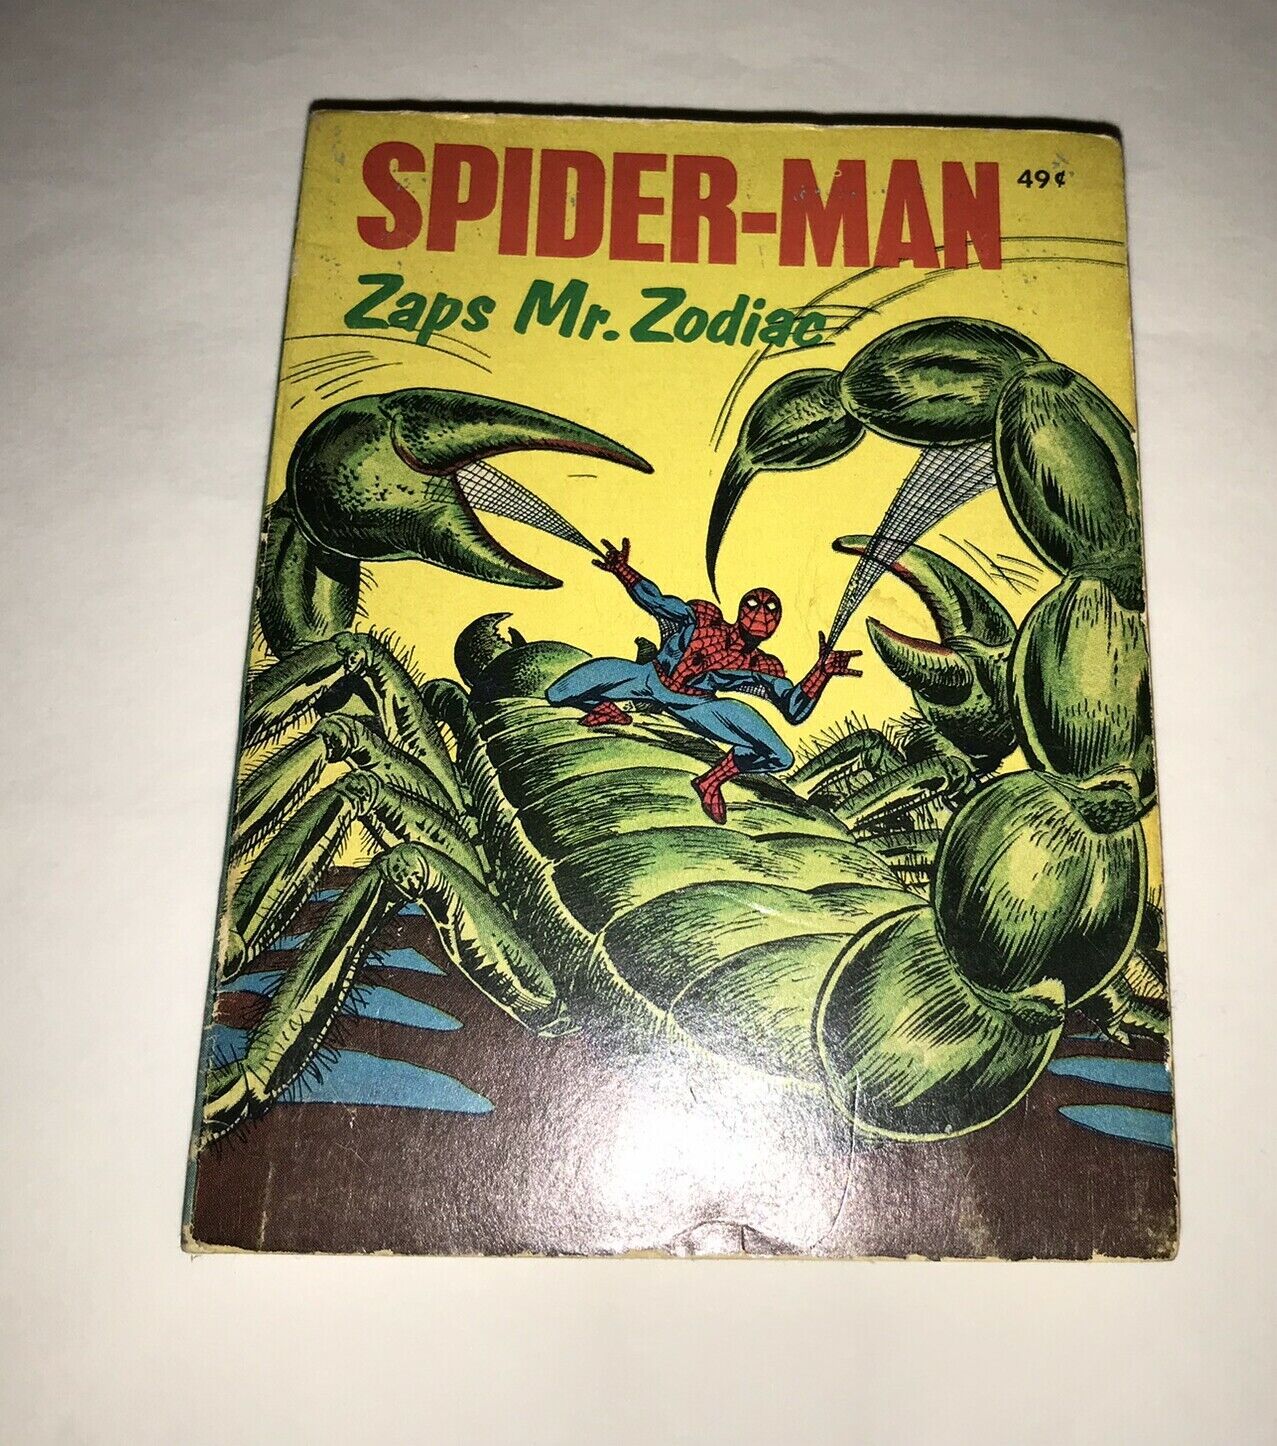 Spider-Man Zaps Mr. Zodiac Big Little Book Elrick Whitman Pub 5779 1976 249 pgs